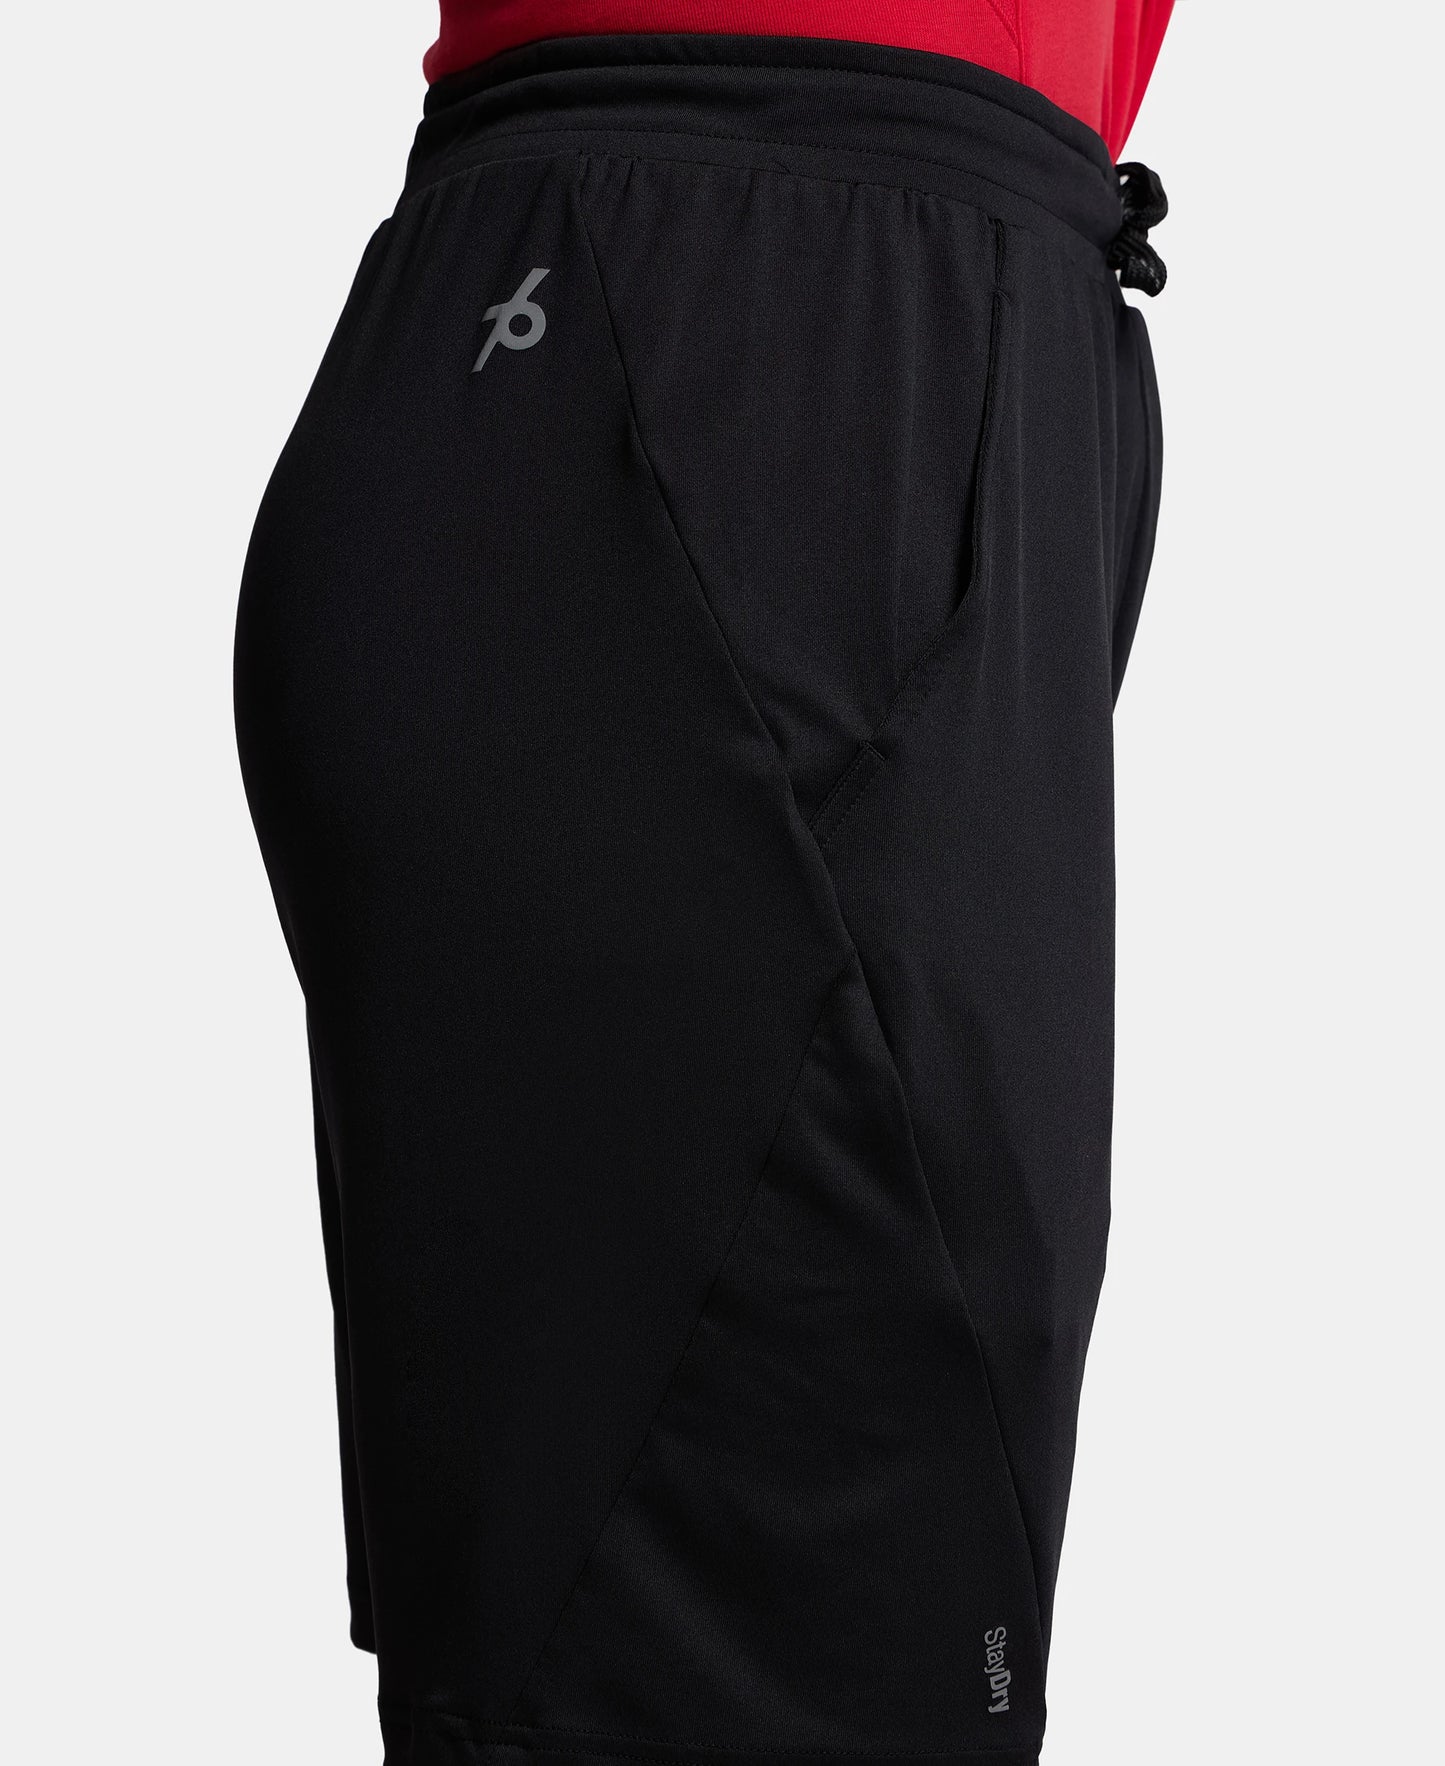 Microfiber Elastane Stretch Solid Shorts with Zipper Media Pocket and StayFresh Treatment - Black-7